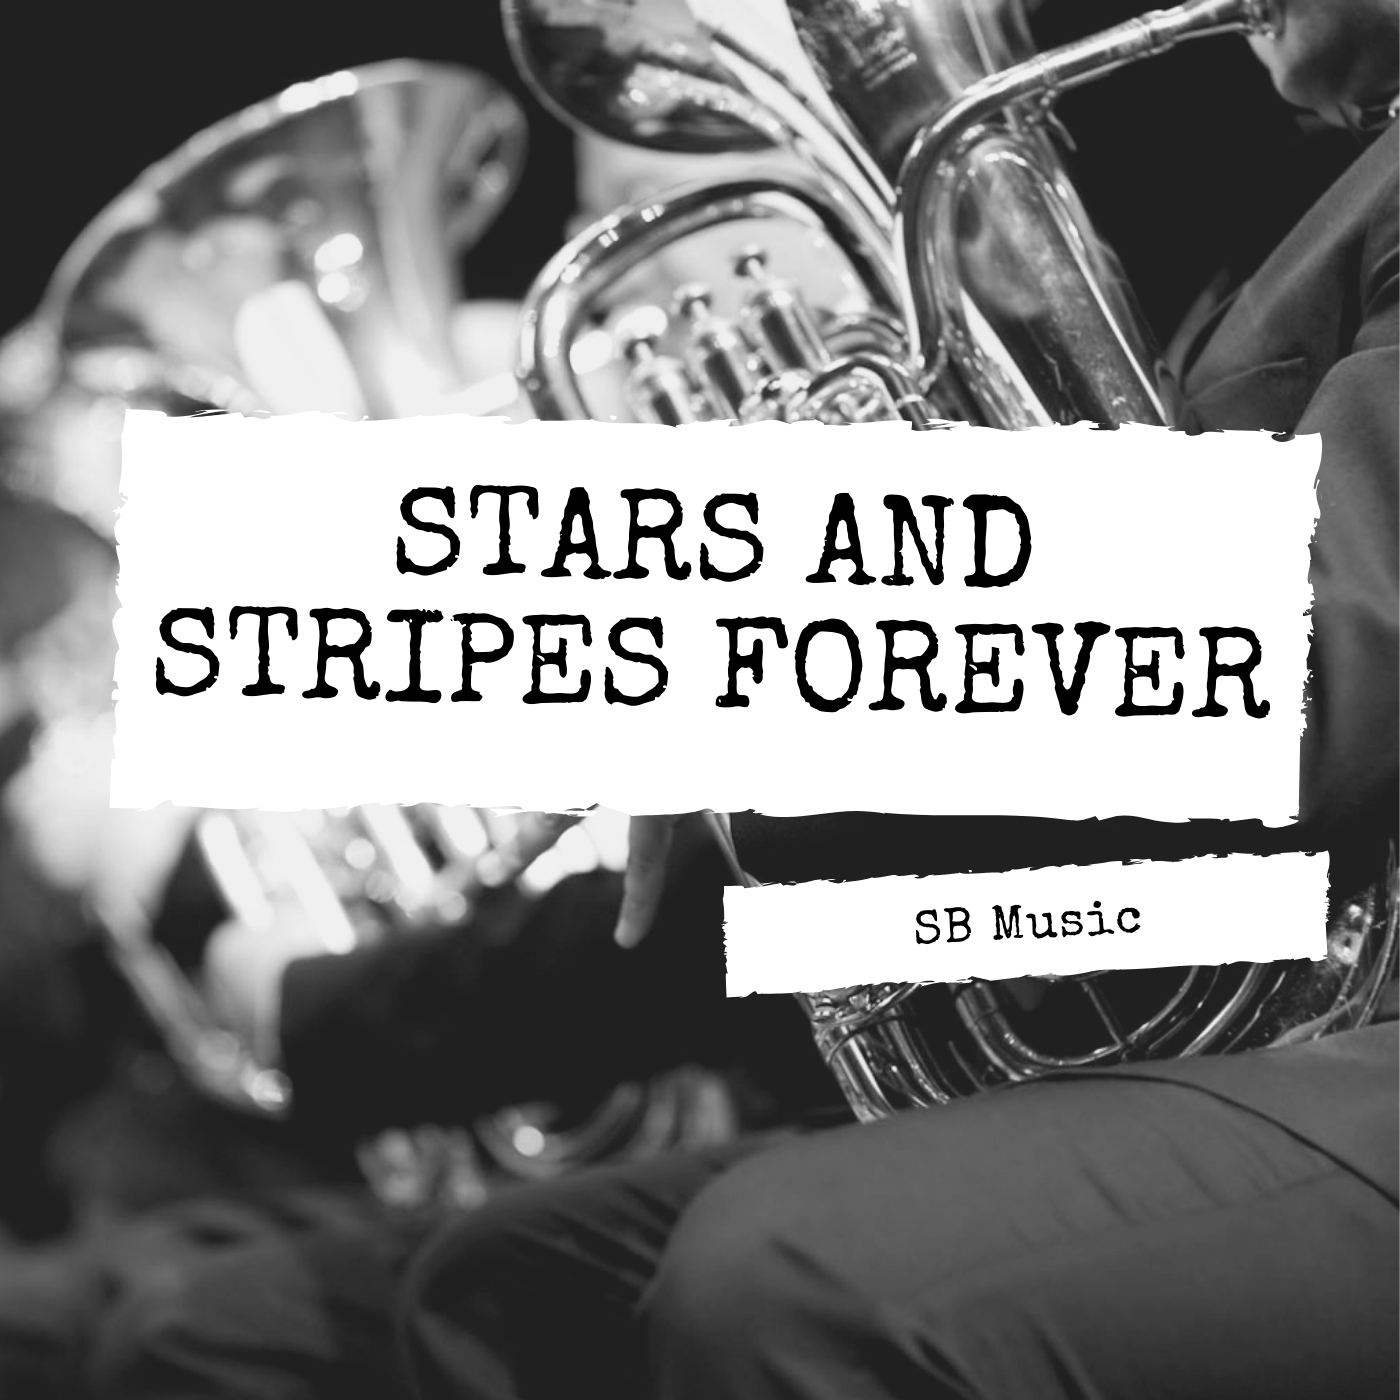 Stars and Stripes Forever 